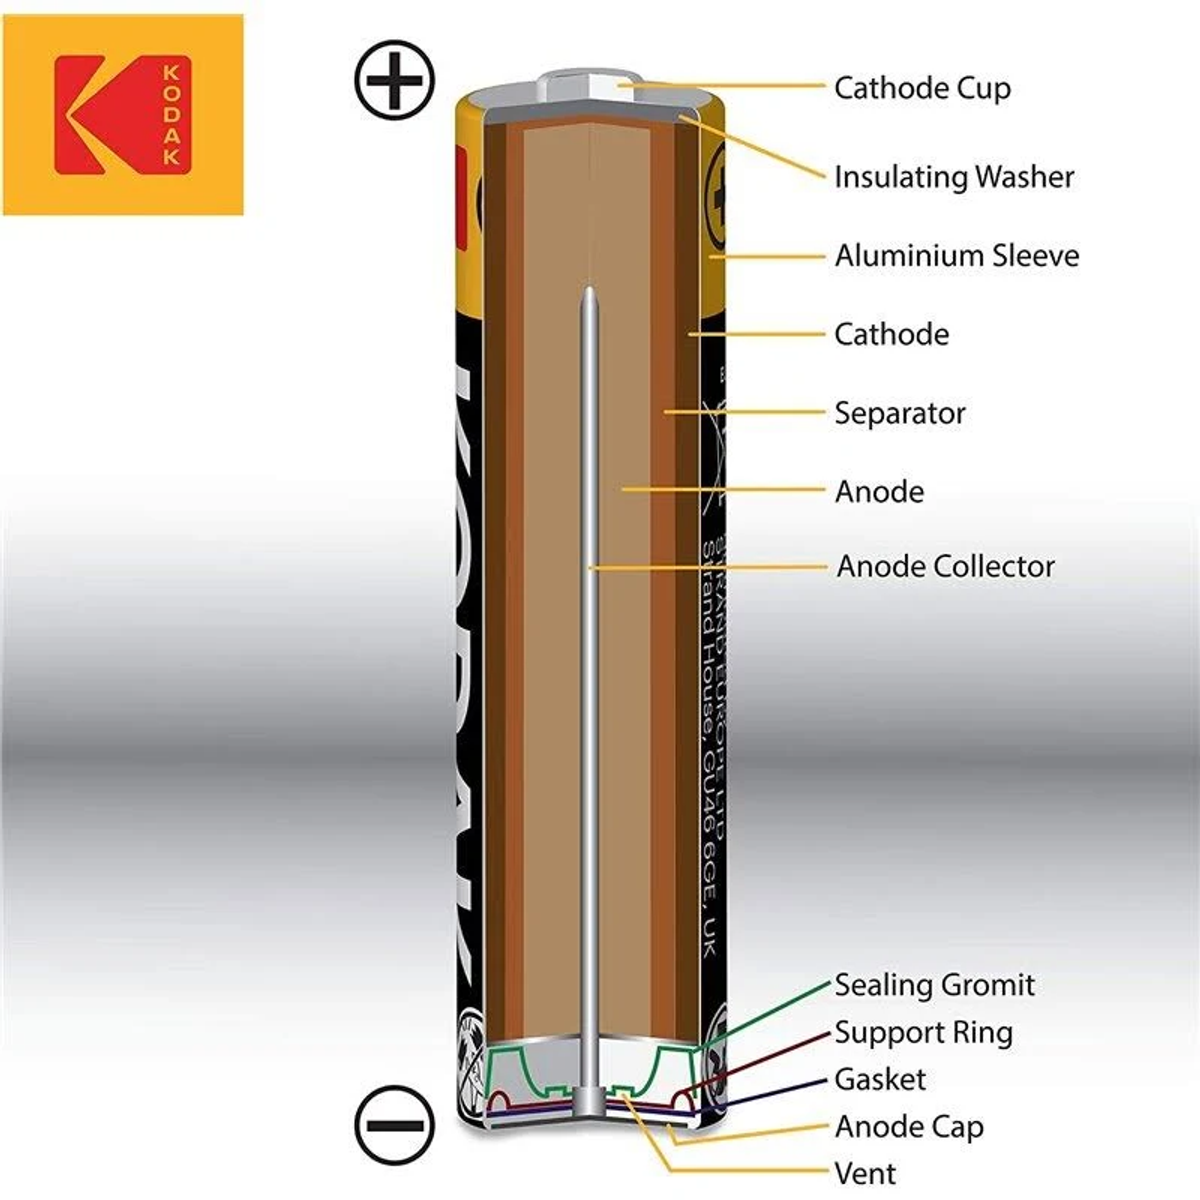 KODAK 30422643 60 AAA Batterien 1.5 Volt erforderlich Mehrzweckbatterien, (enthalten)